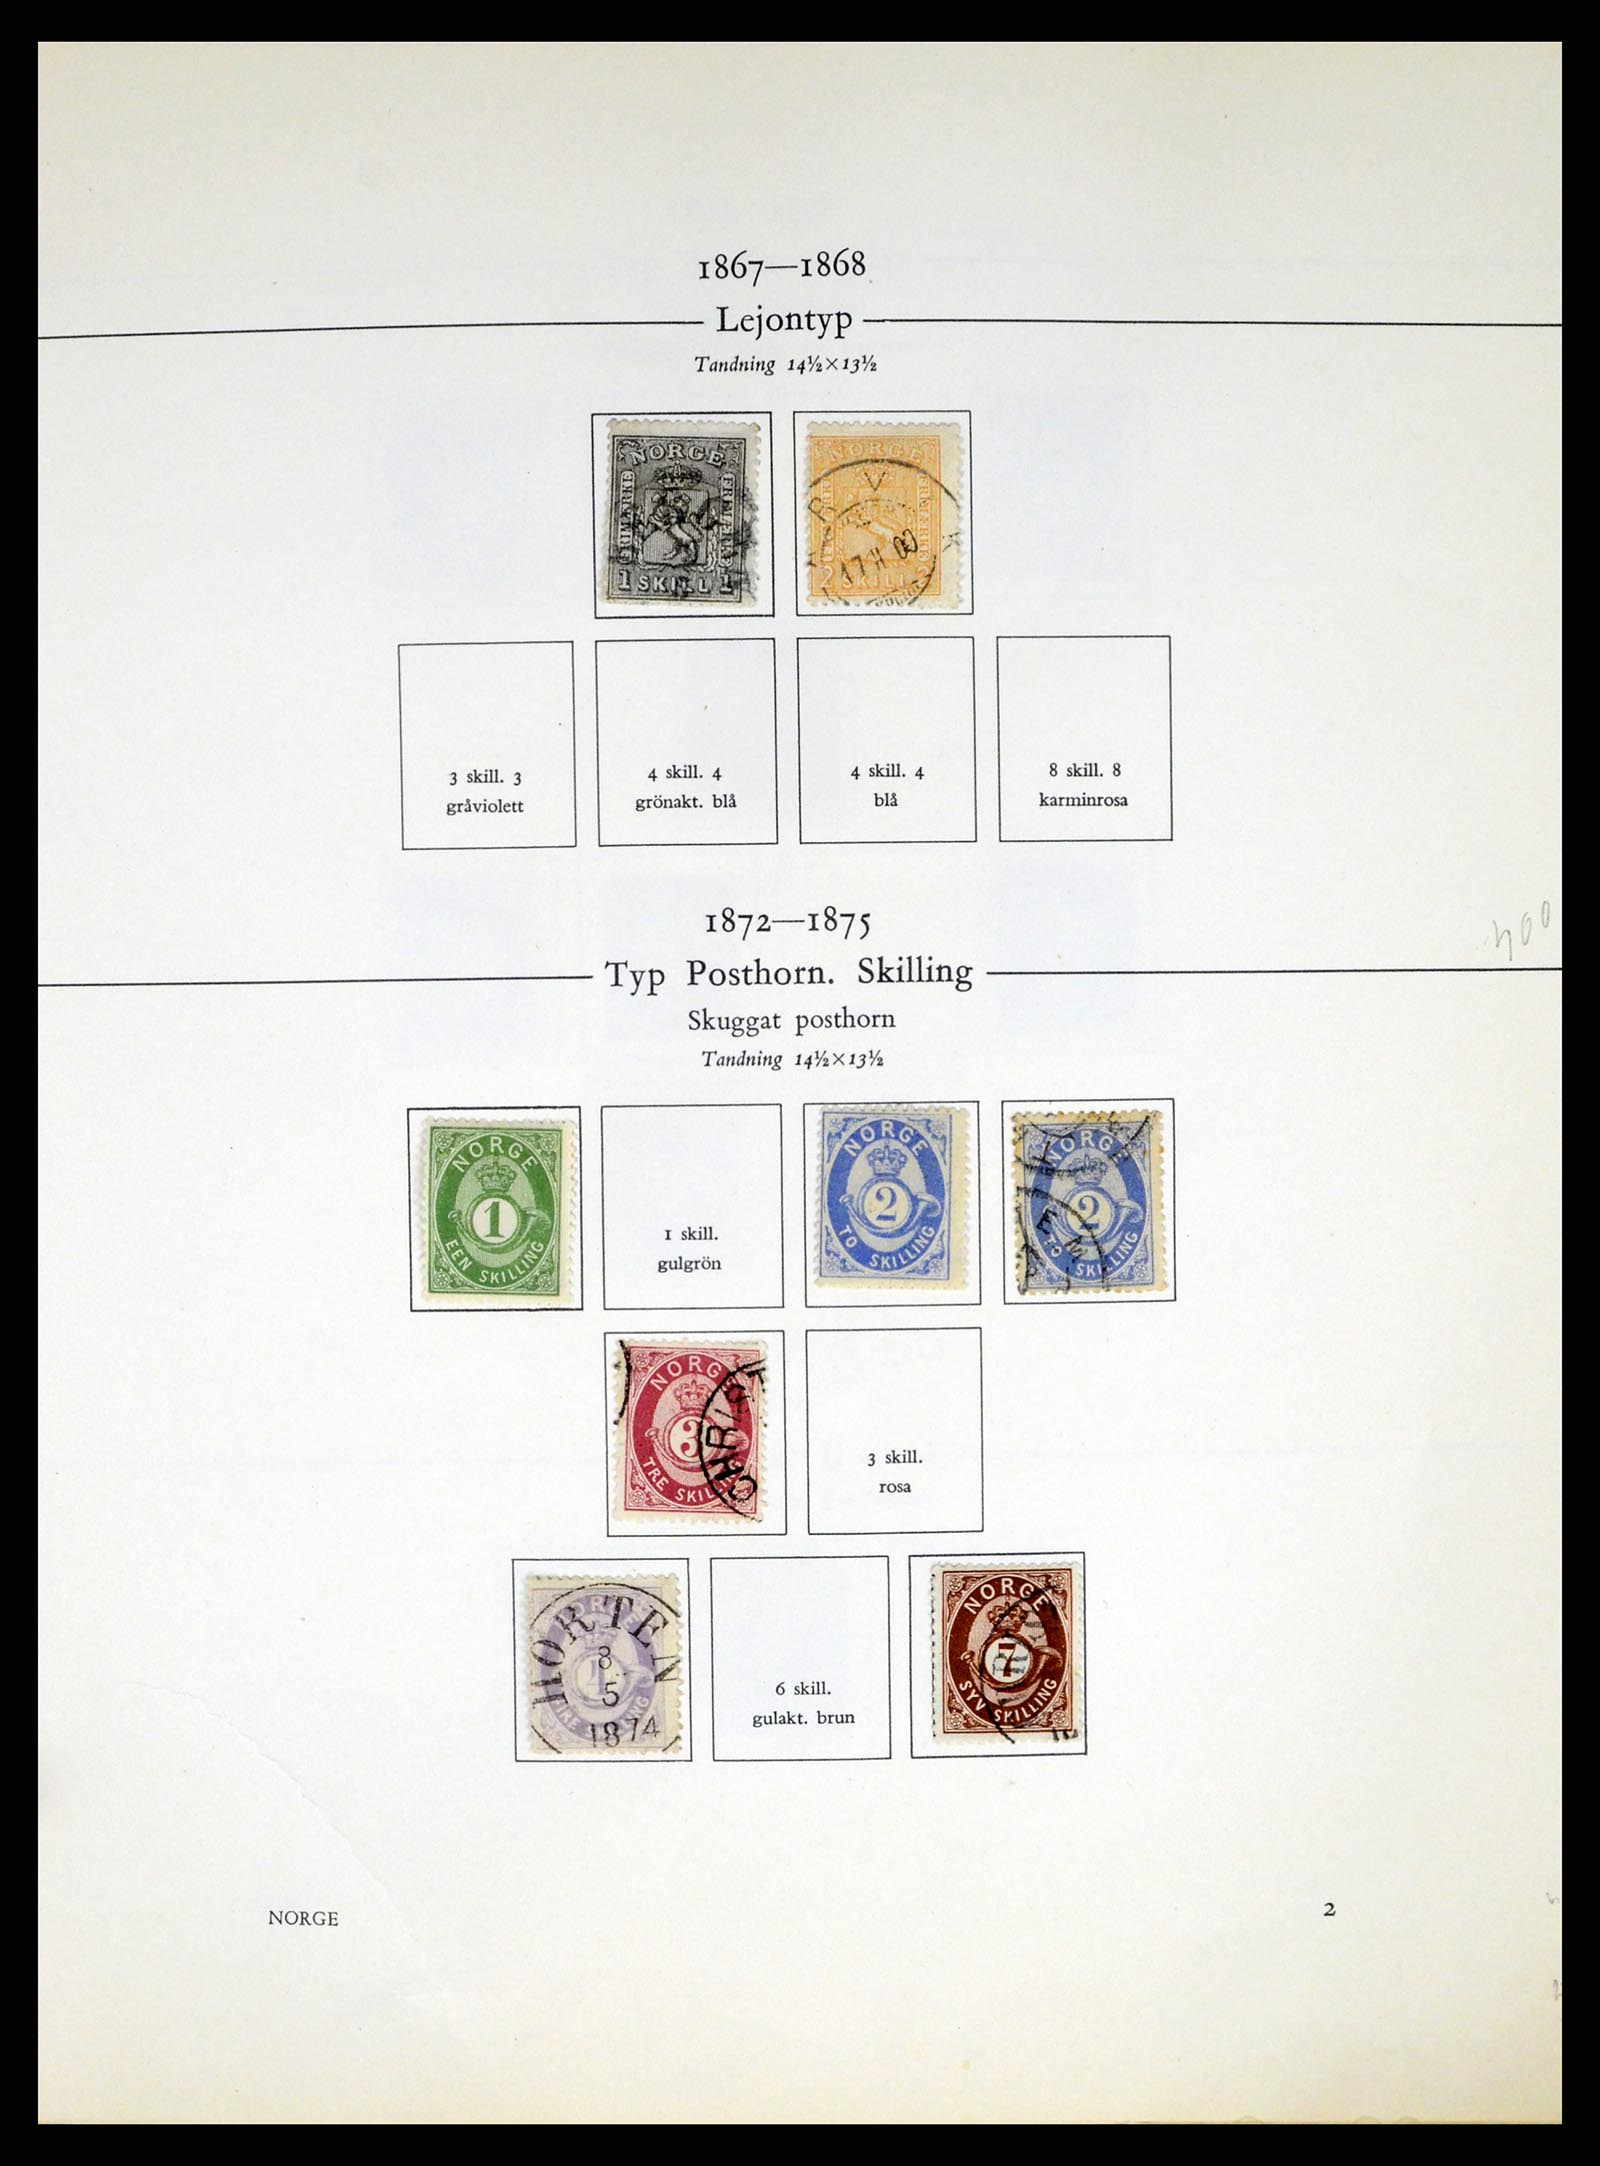 37387 002 - Stamp collection 37387 Scandinavia 1851-1960.